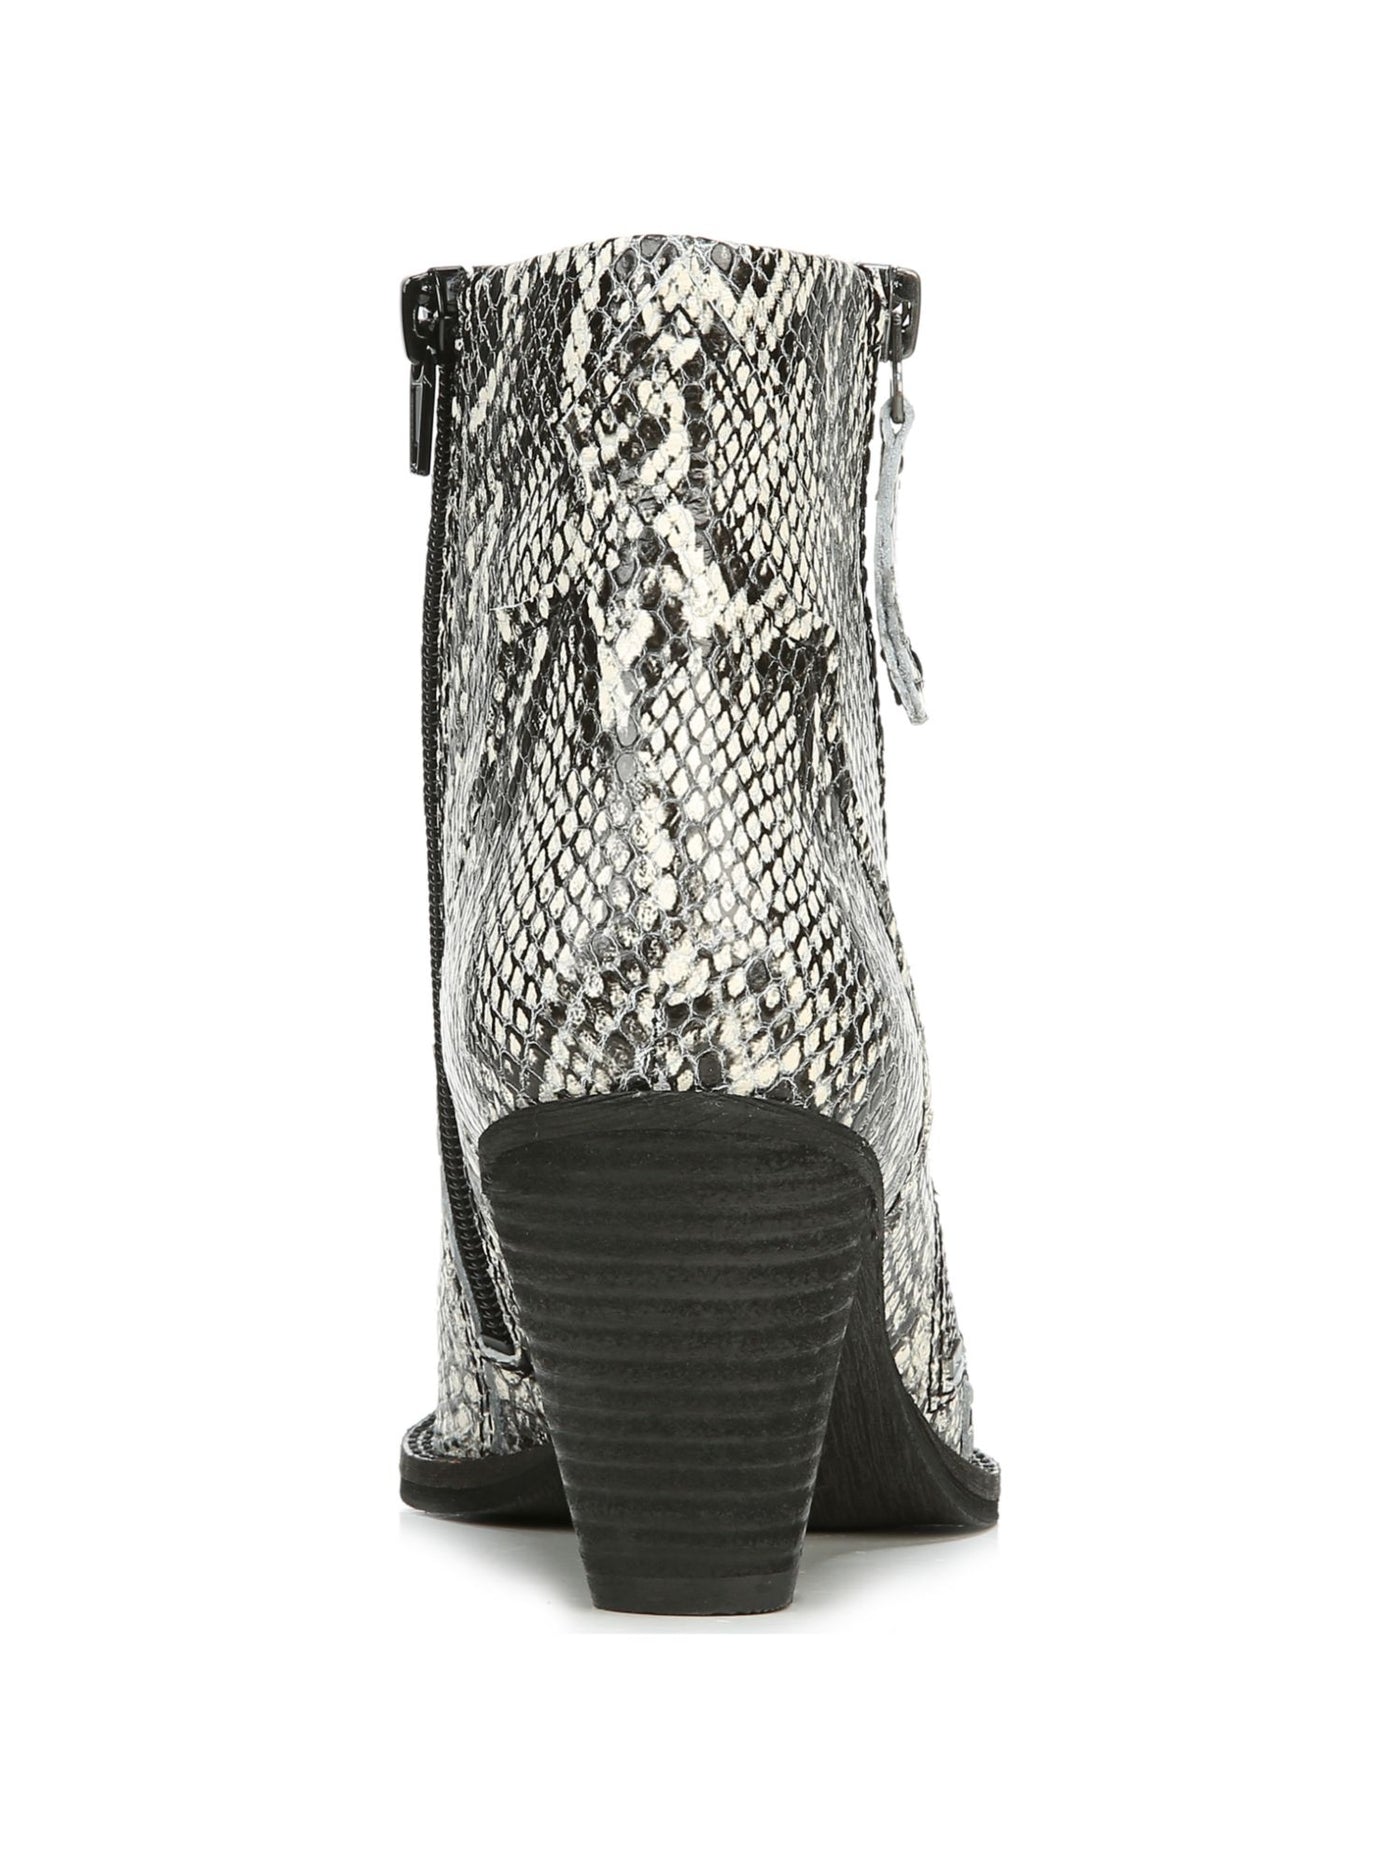 ZODIAC Womens Black Dual Zip Pointed Toe Stacked Heel Zip-Up Leather Dress Booties 6